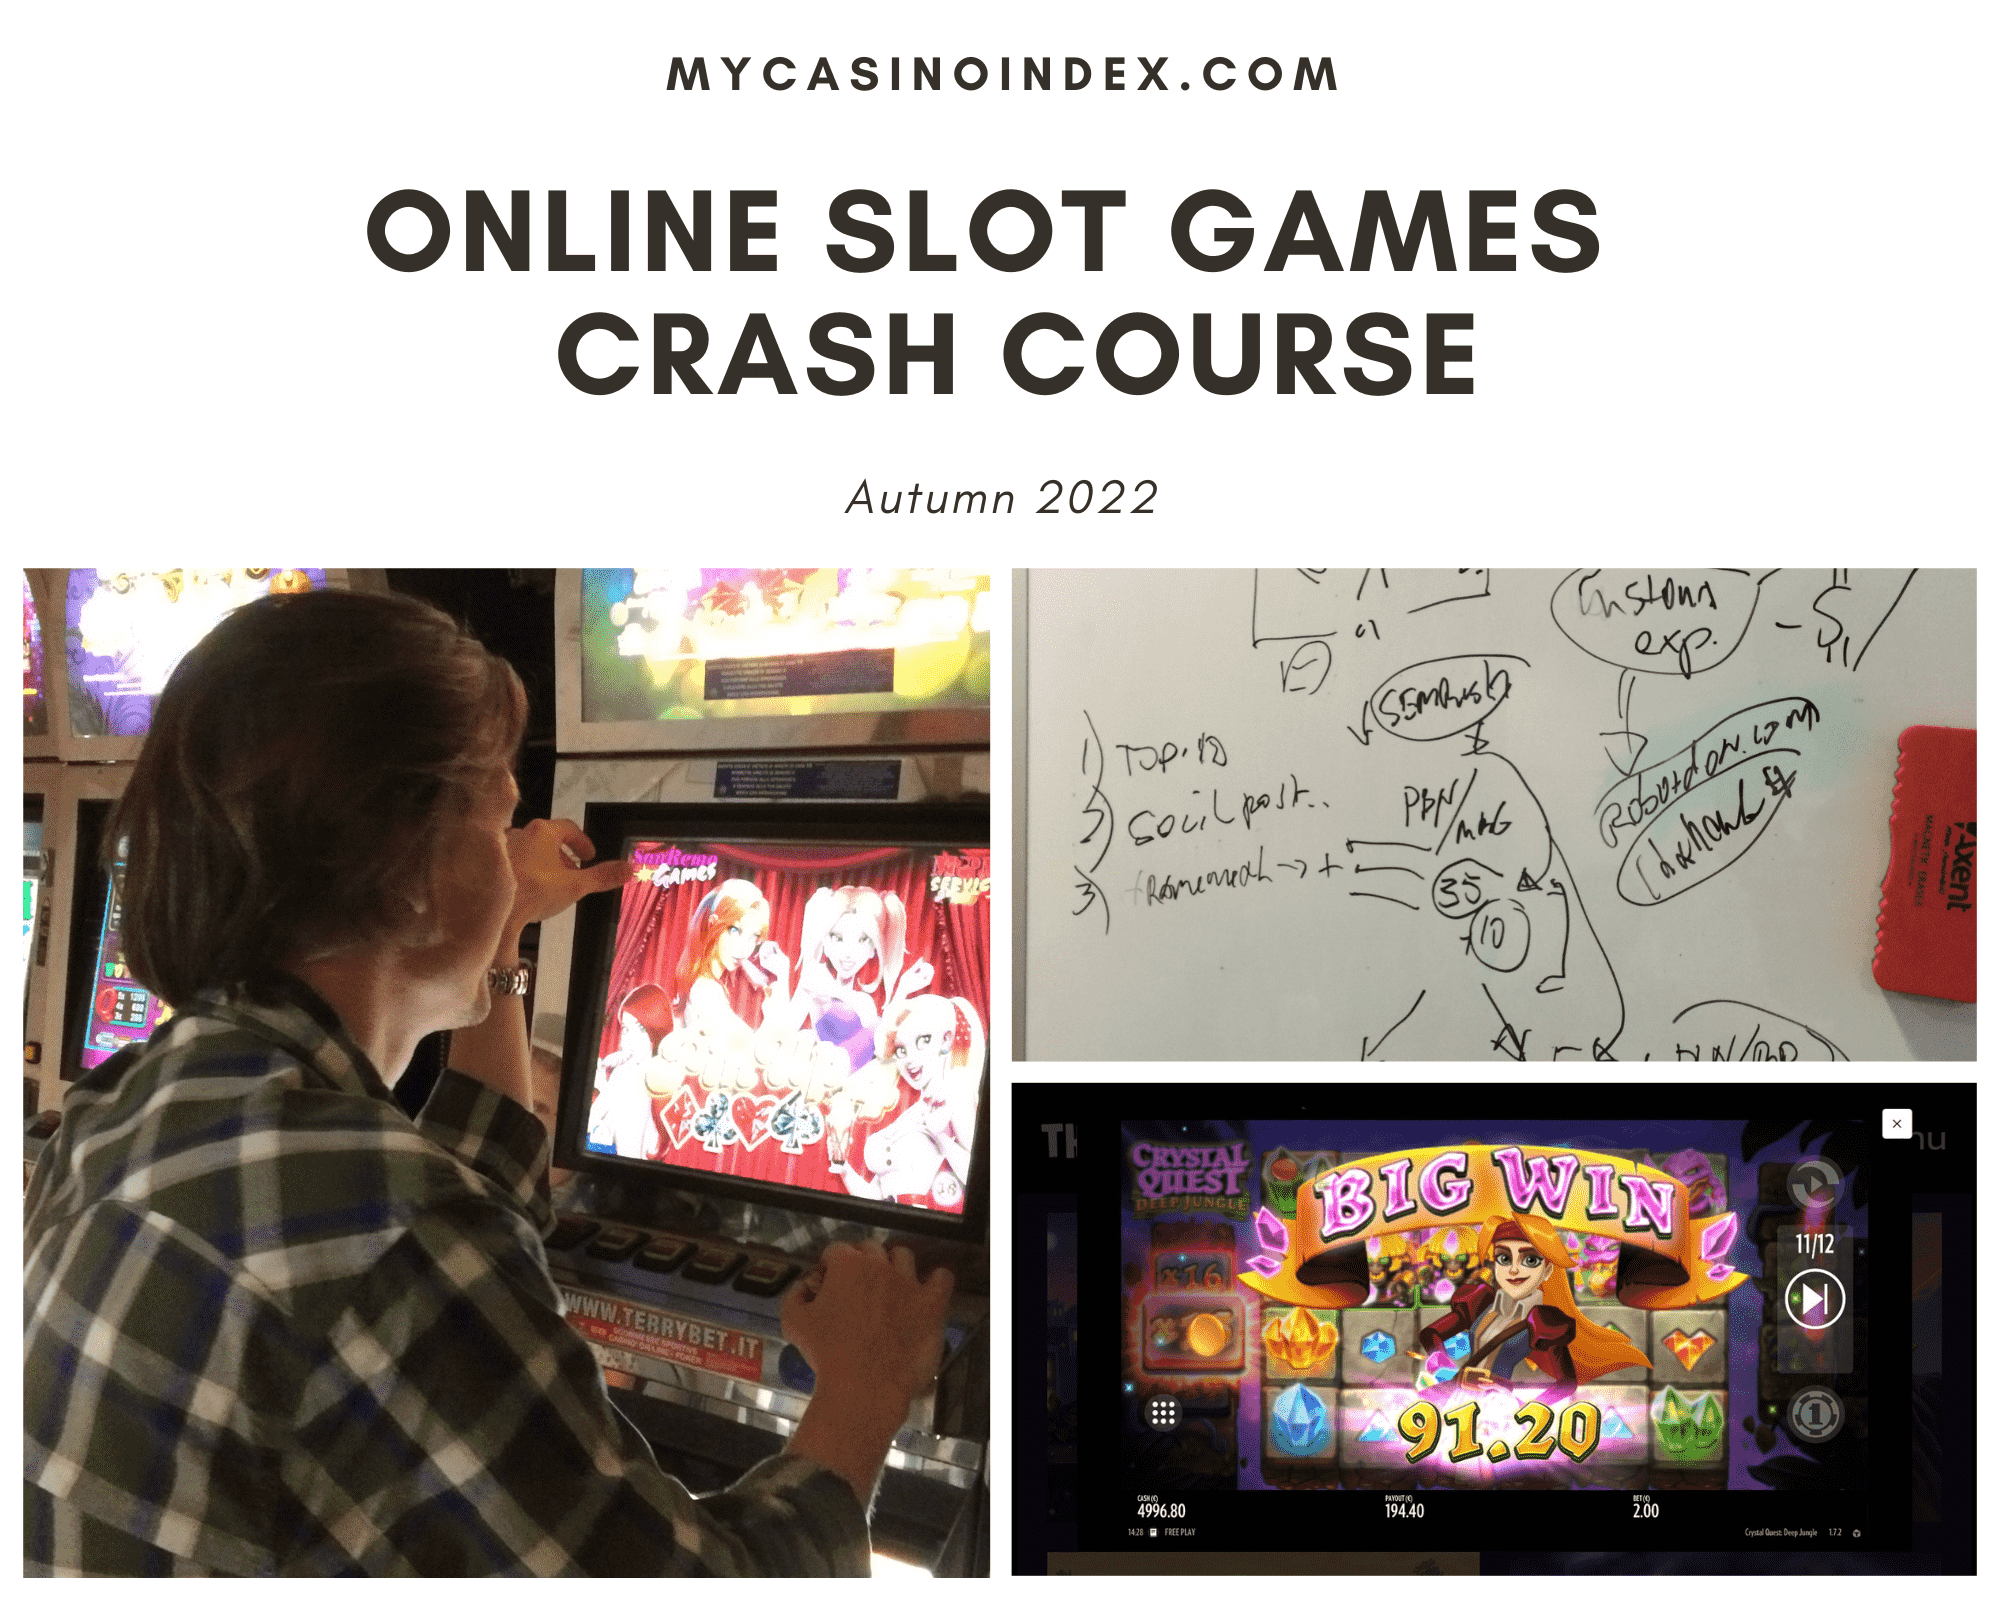 Online Slot Games Crash Course logotype